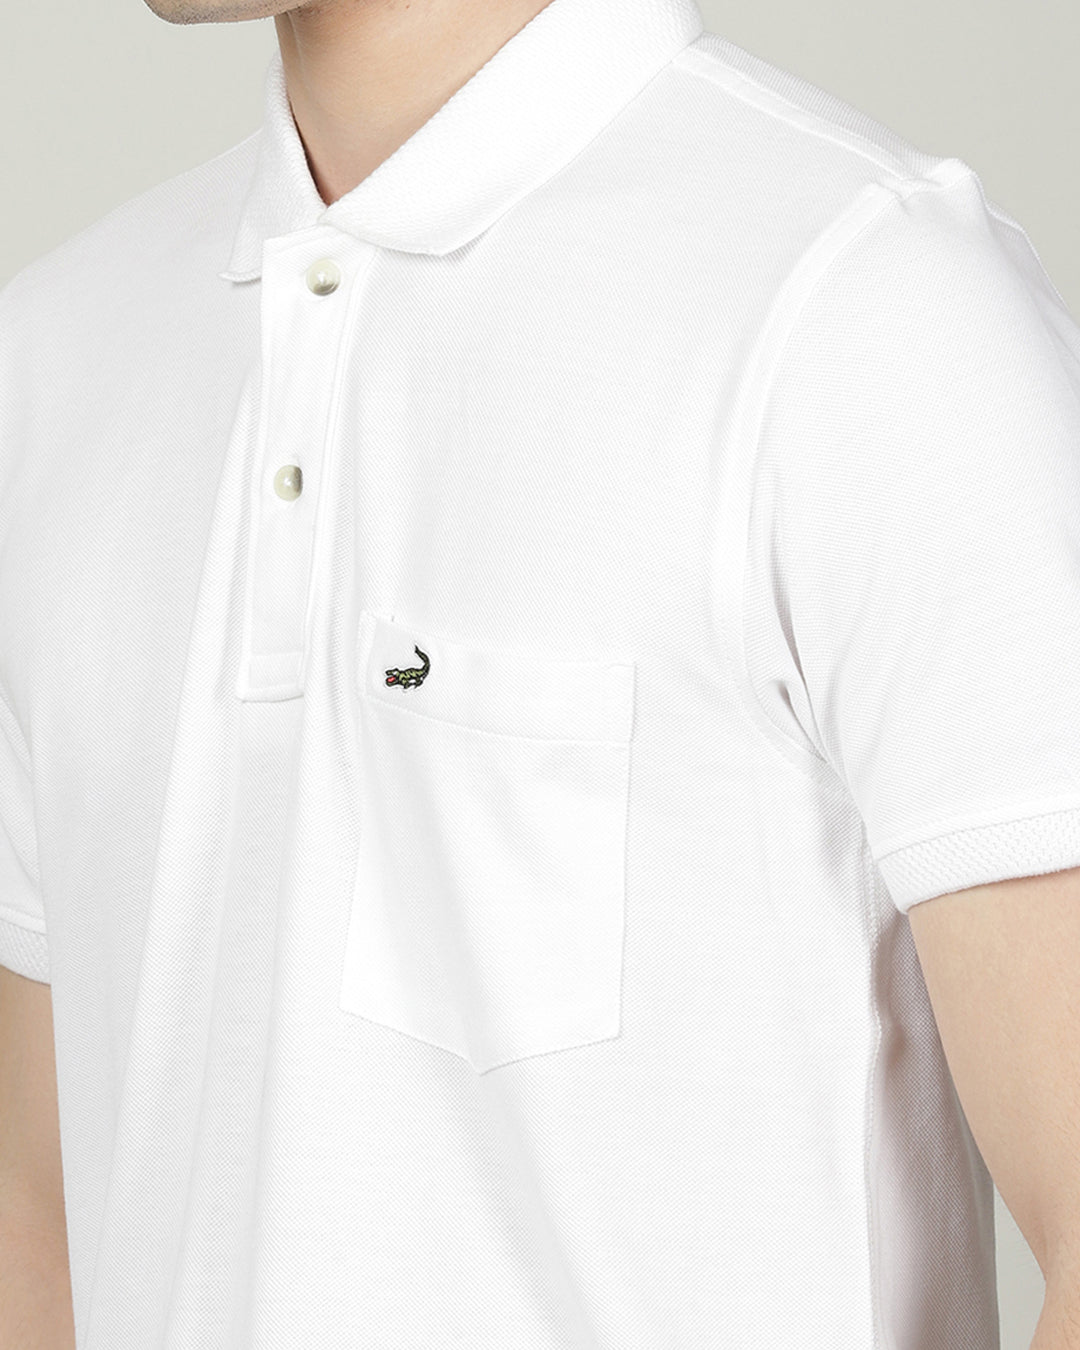 Crocodile Men's White Slim Fit T-shirt